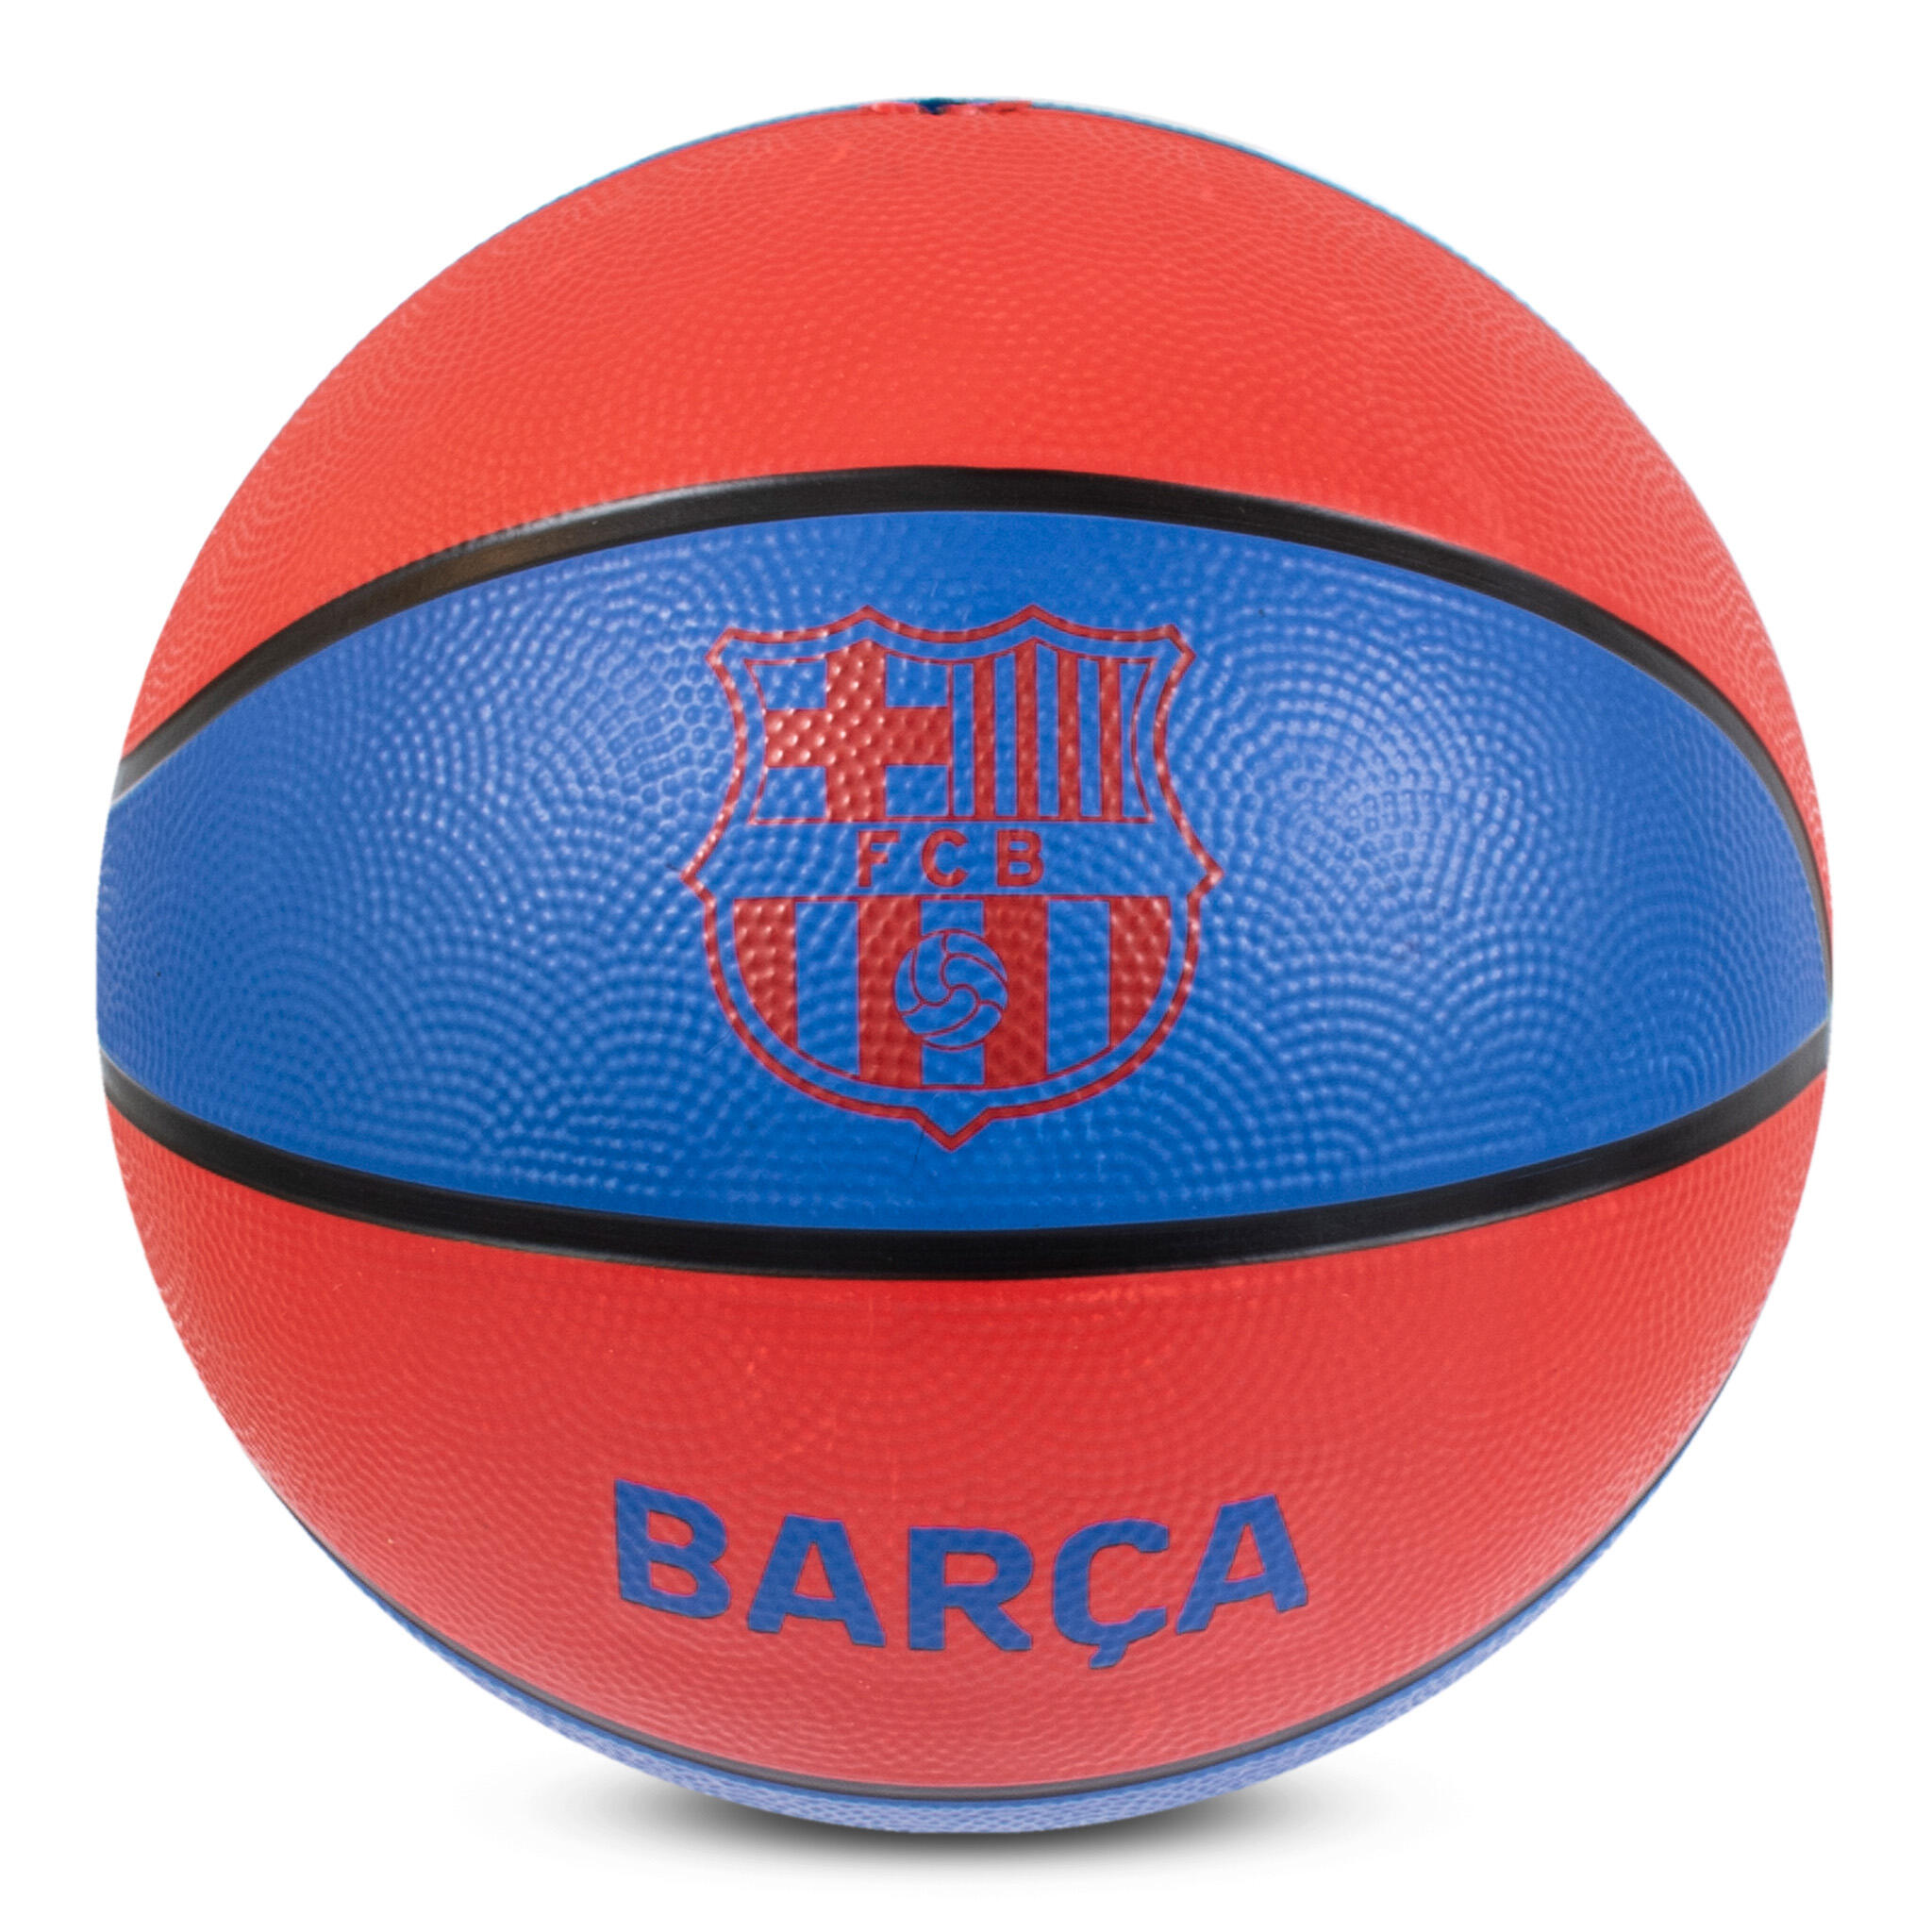 Barcelona Size 7 Basketball 1/5